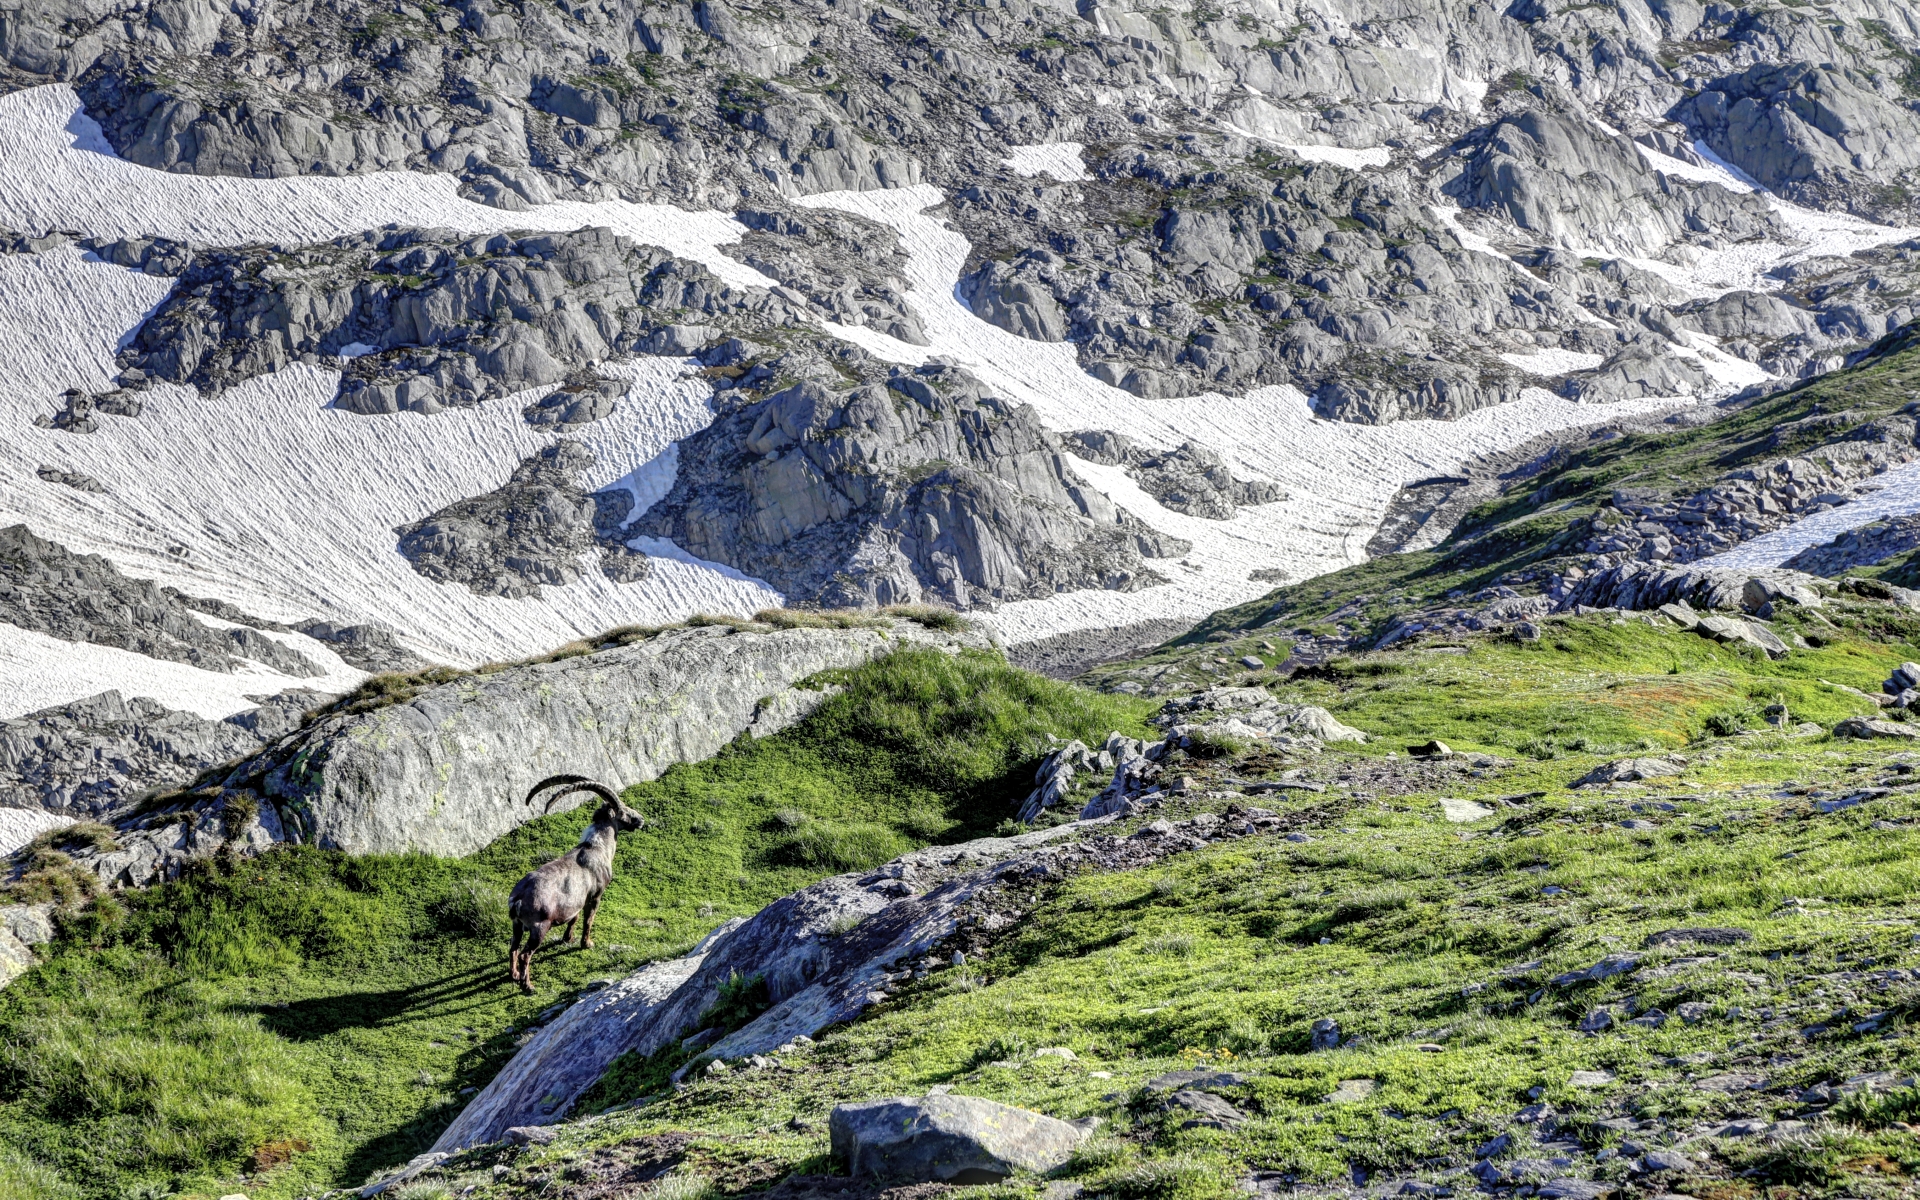 Animal Alpine Ibex HD Wallpaper | Background Image